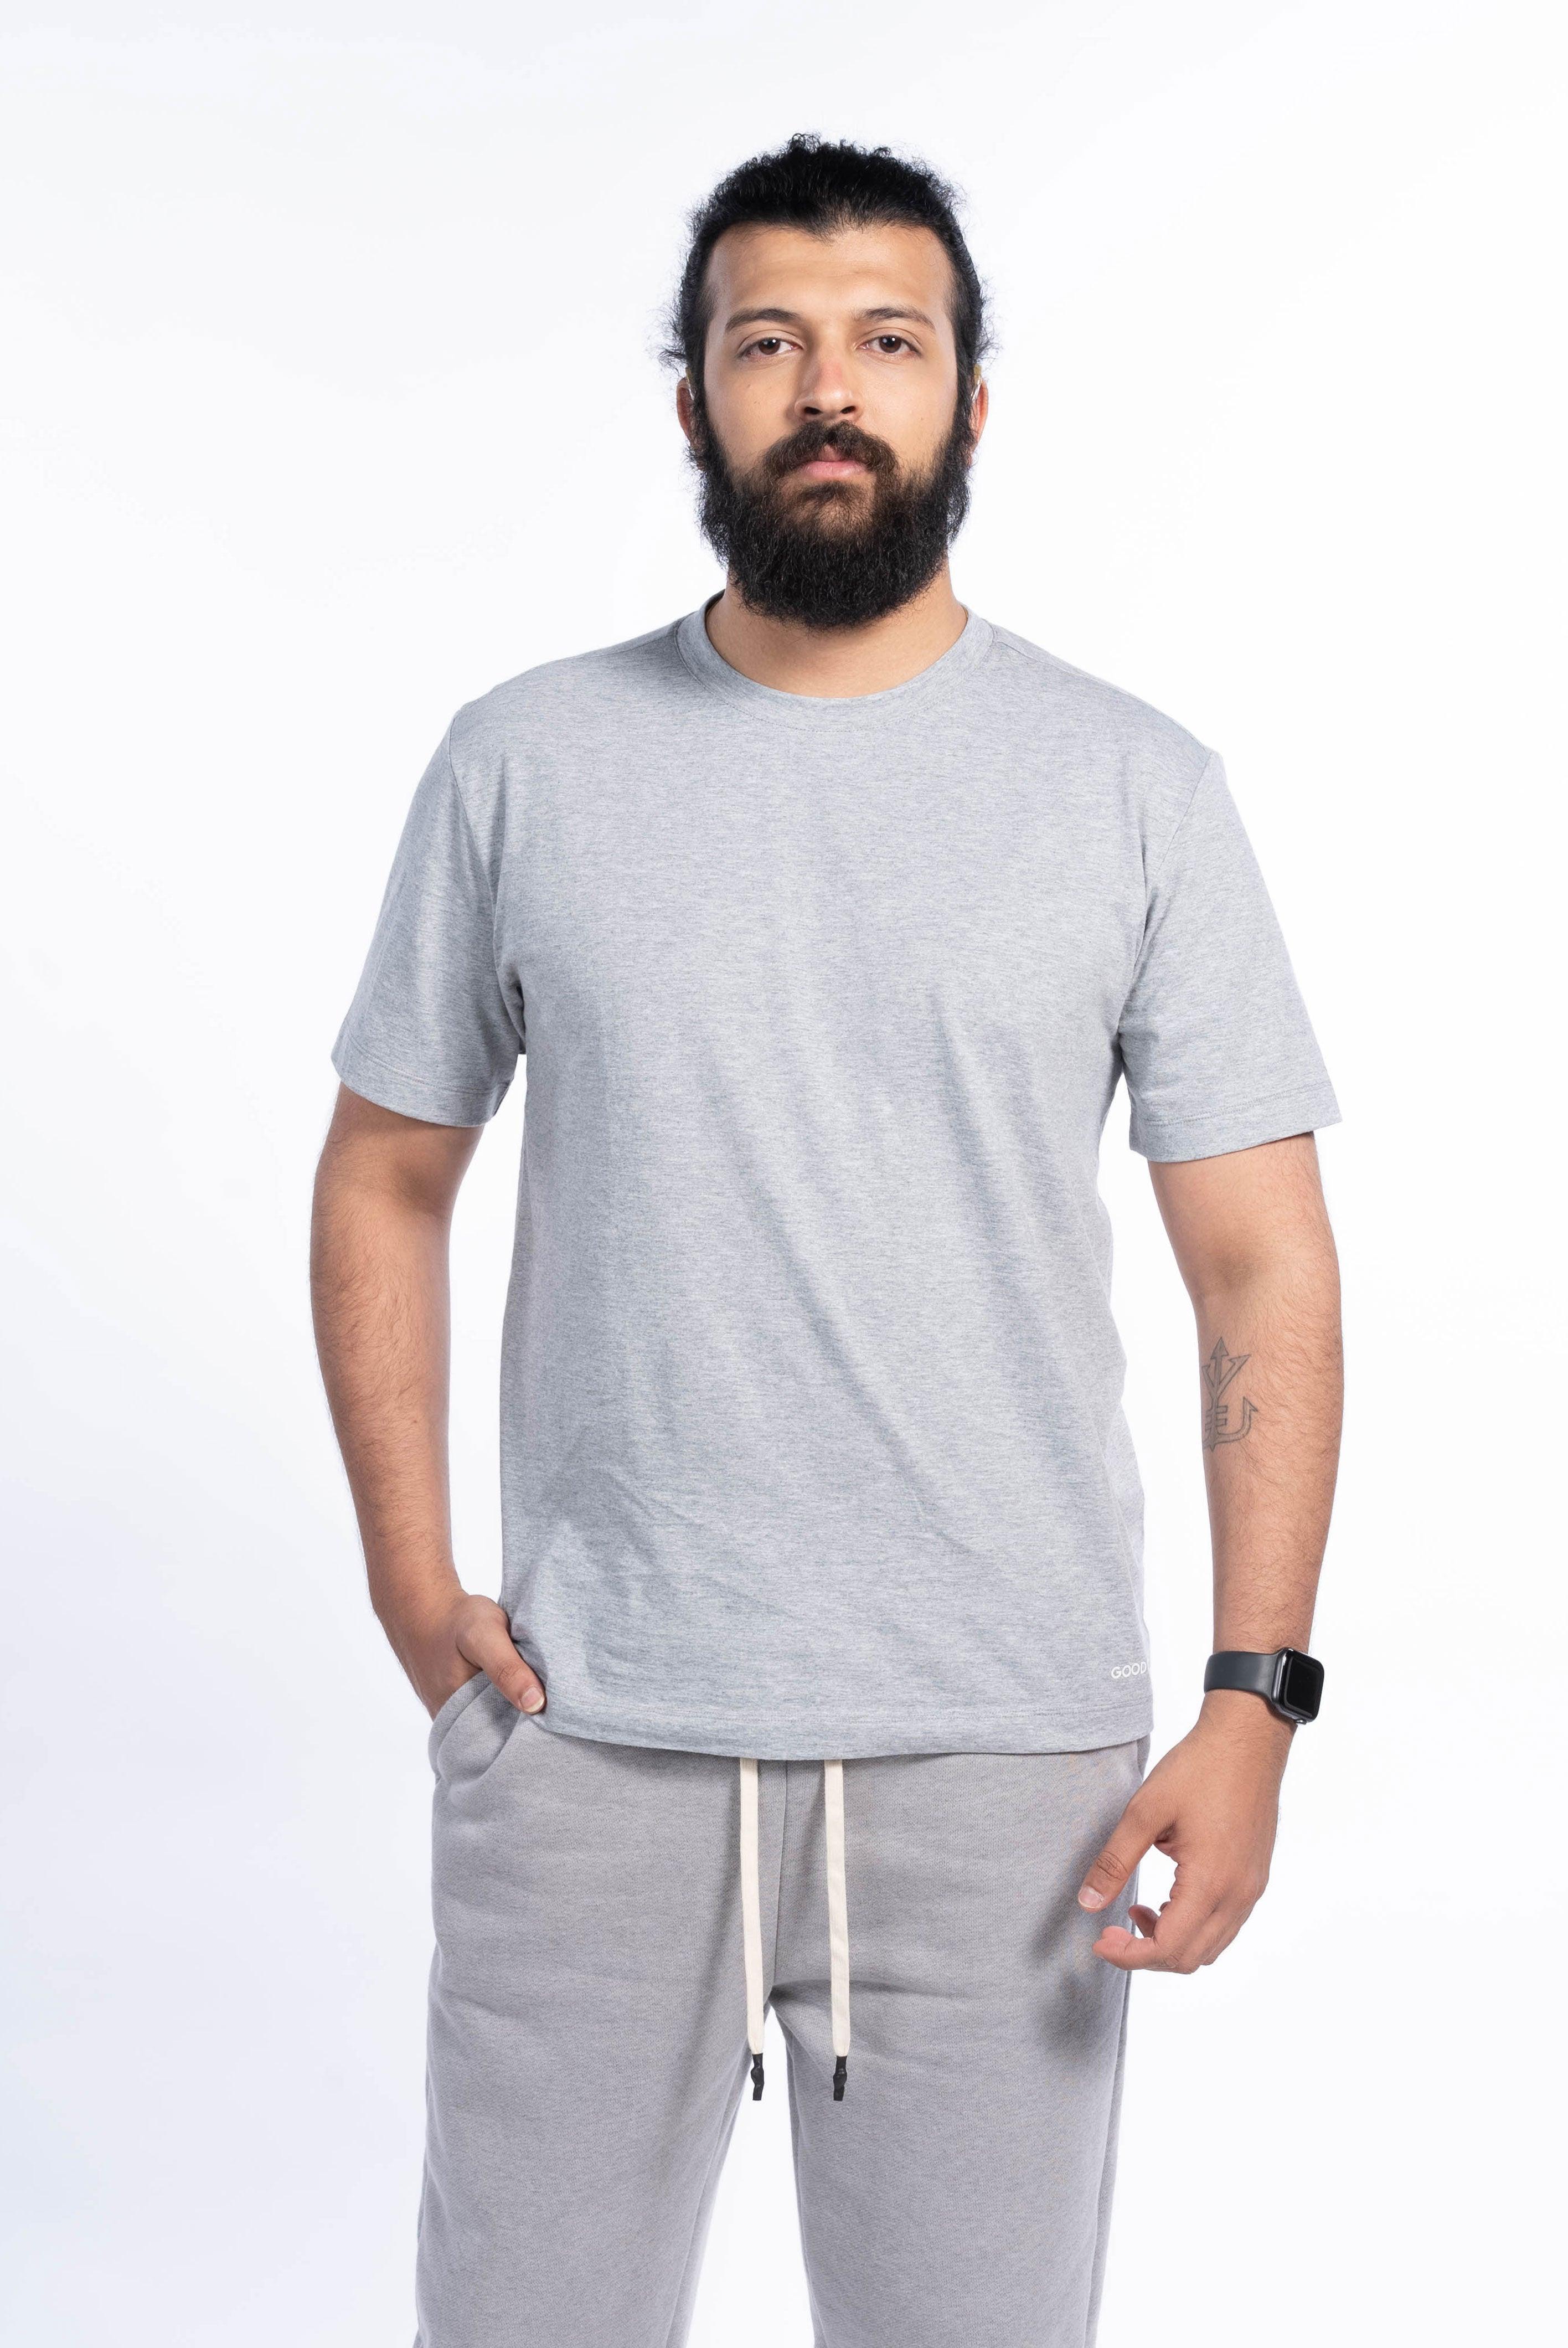 Men’s Essential T-shirt - Good Indian